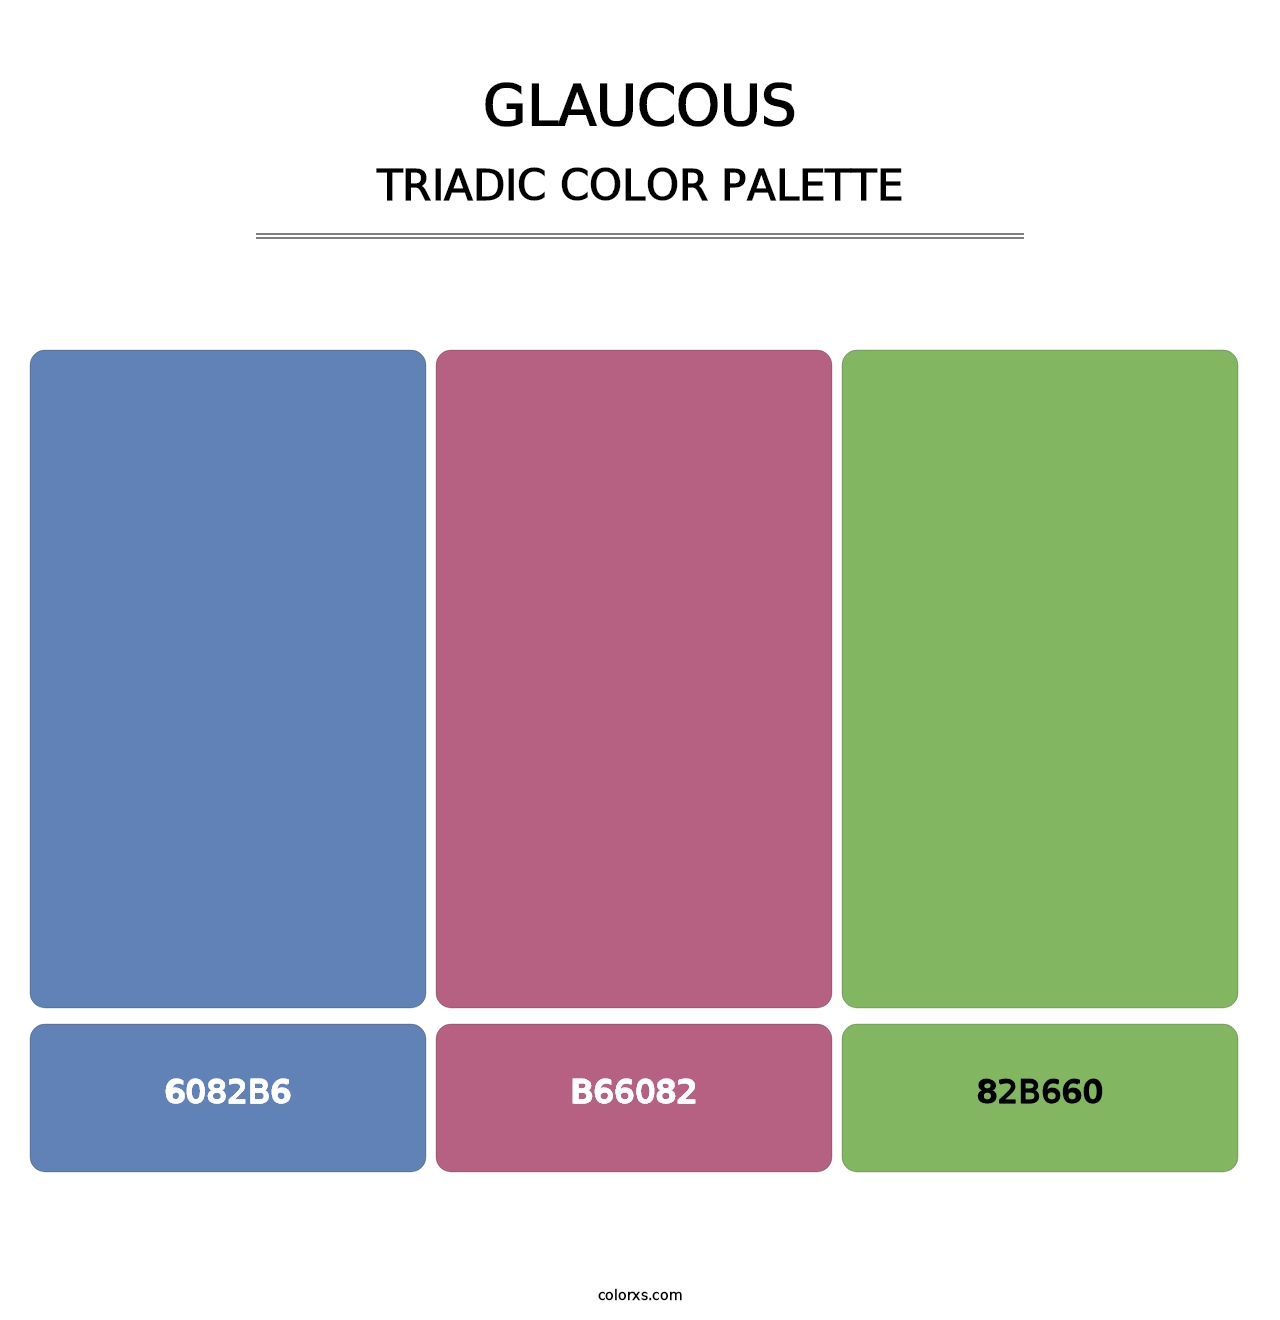 Glaucous - Triadic Color Palette